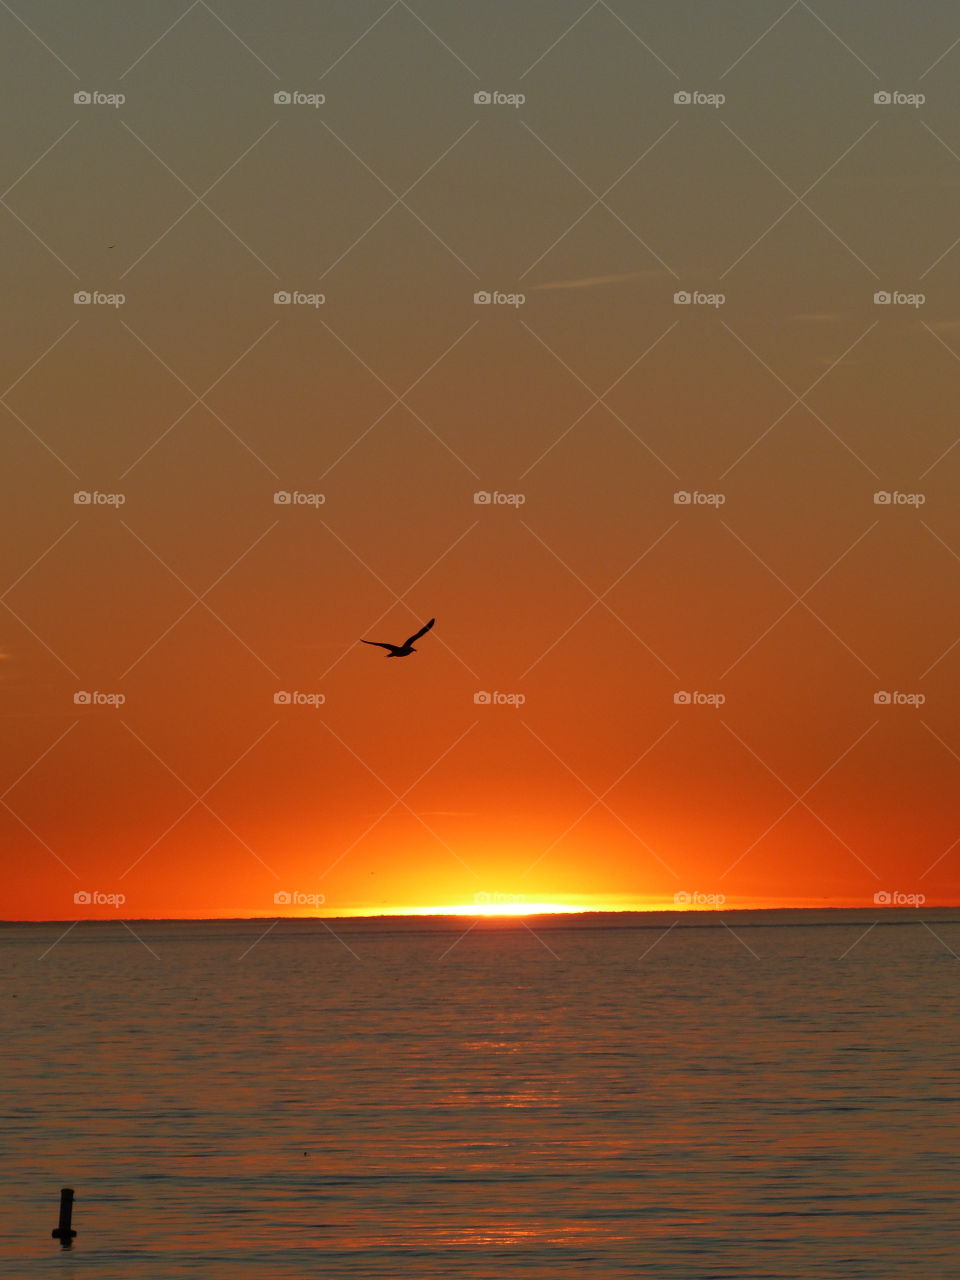 Seagull's silhouette